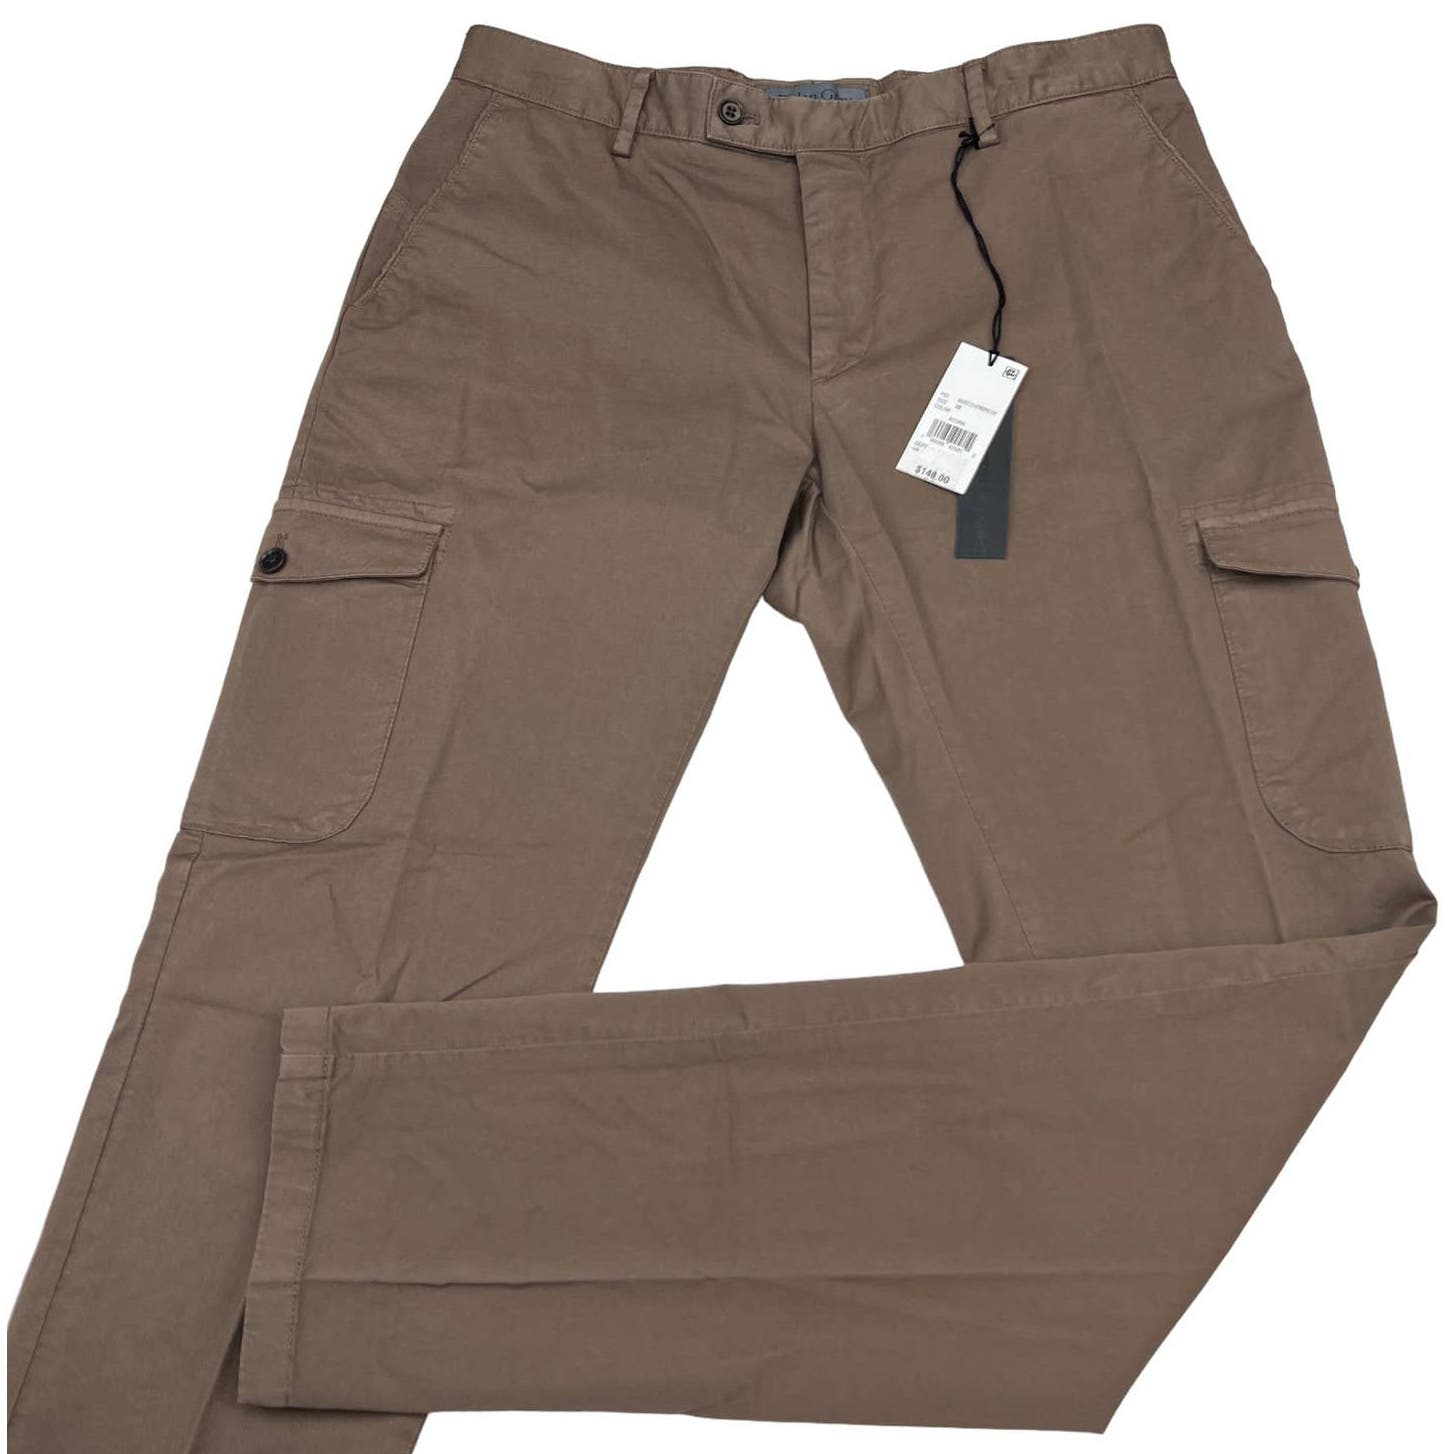 Dylan Gray Men Brown Pants US 32 Regular Fit Cargo